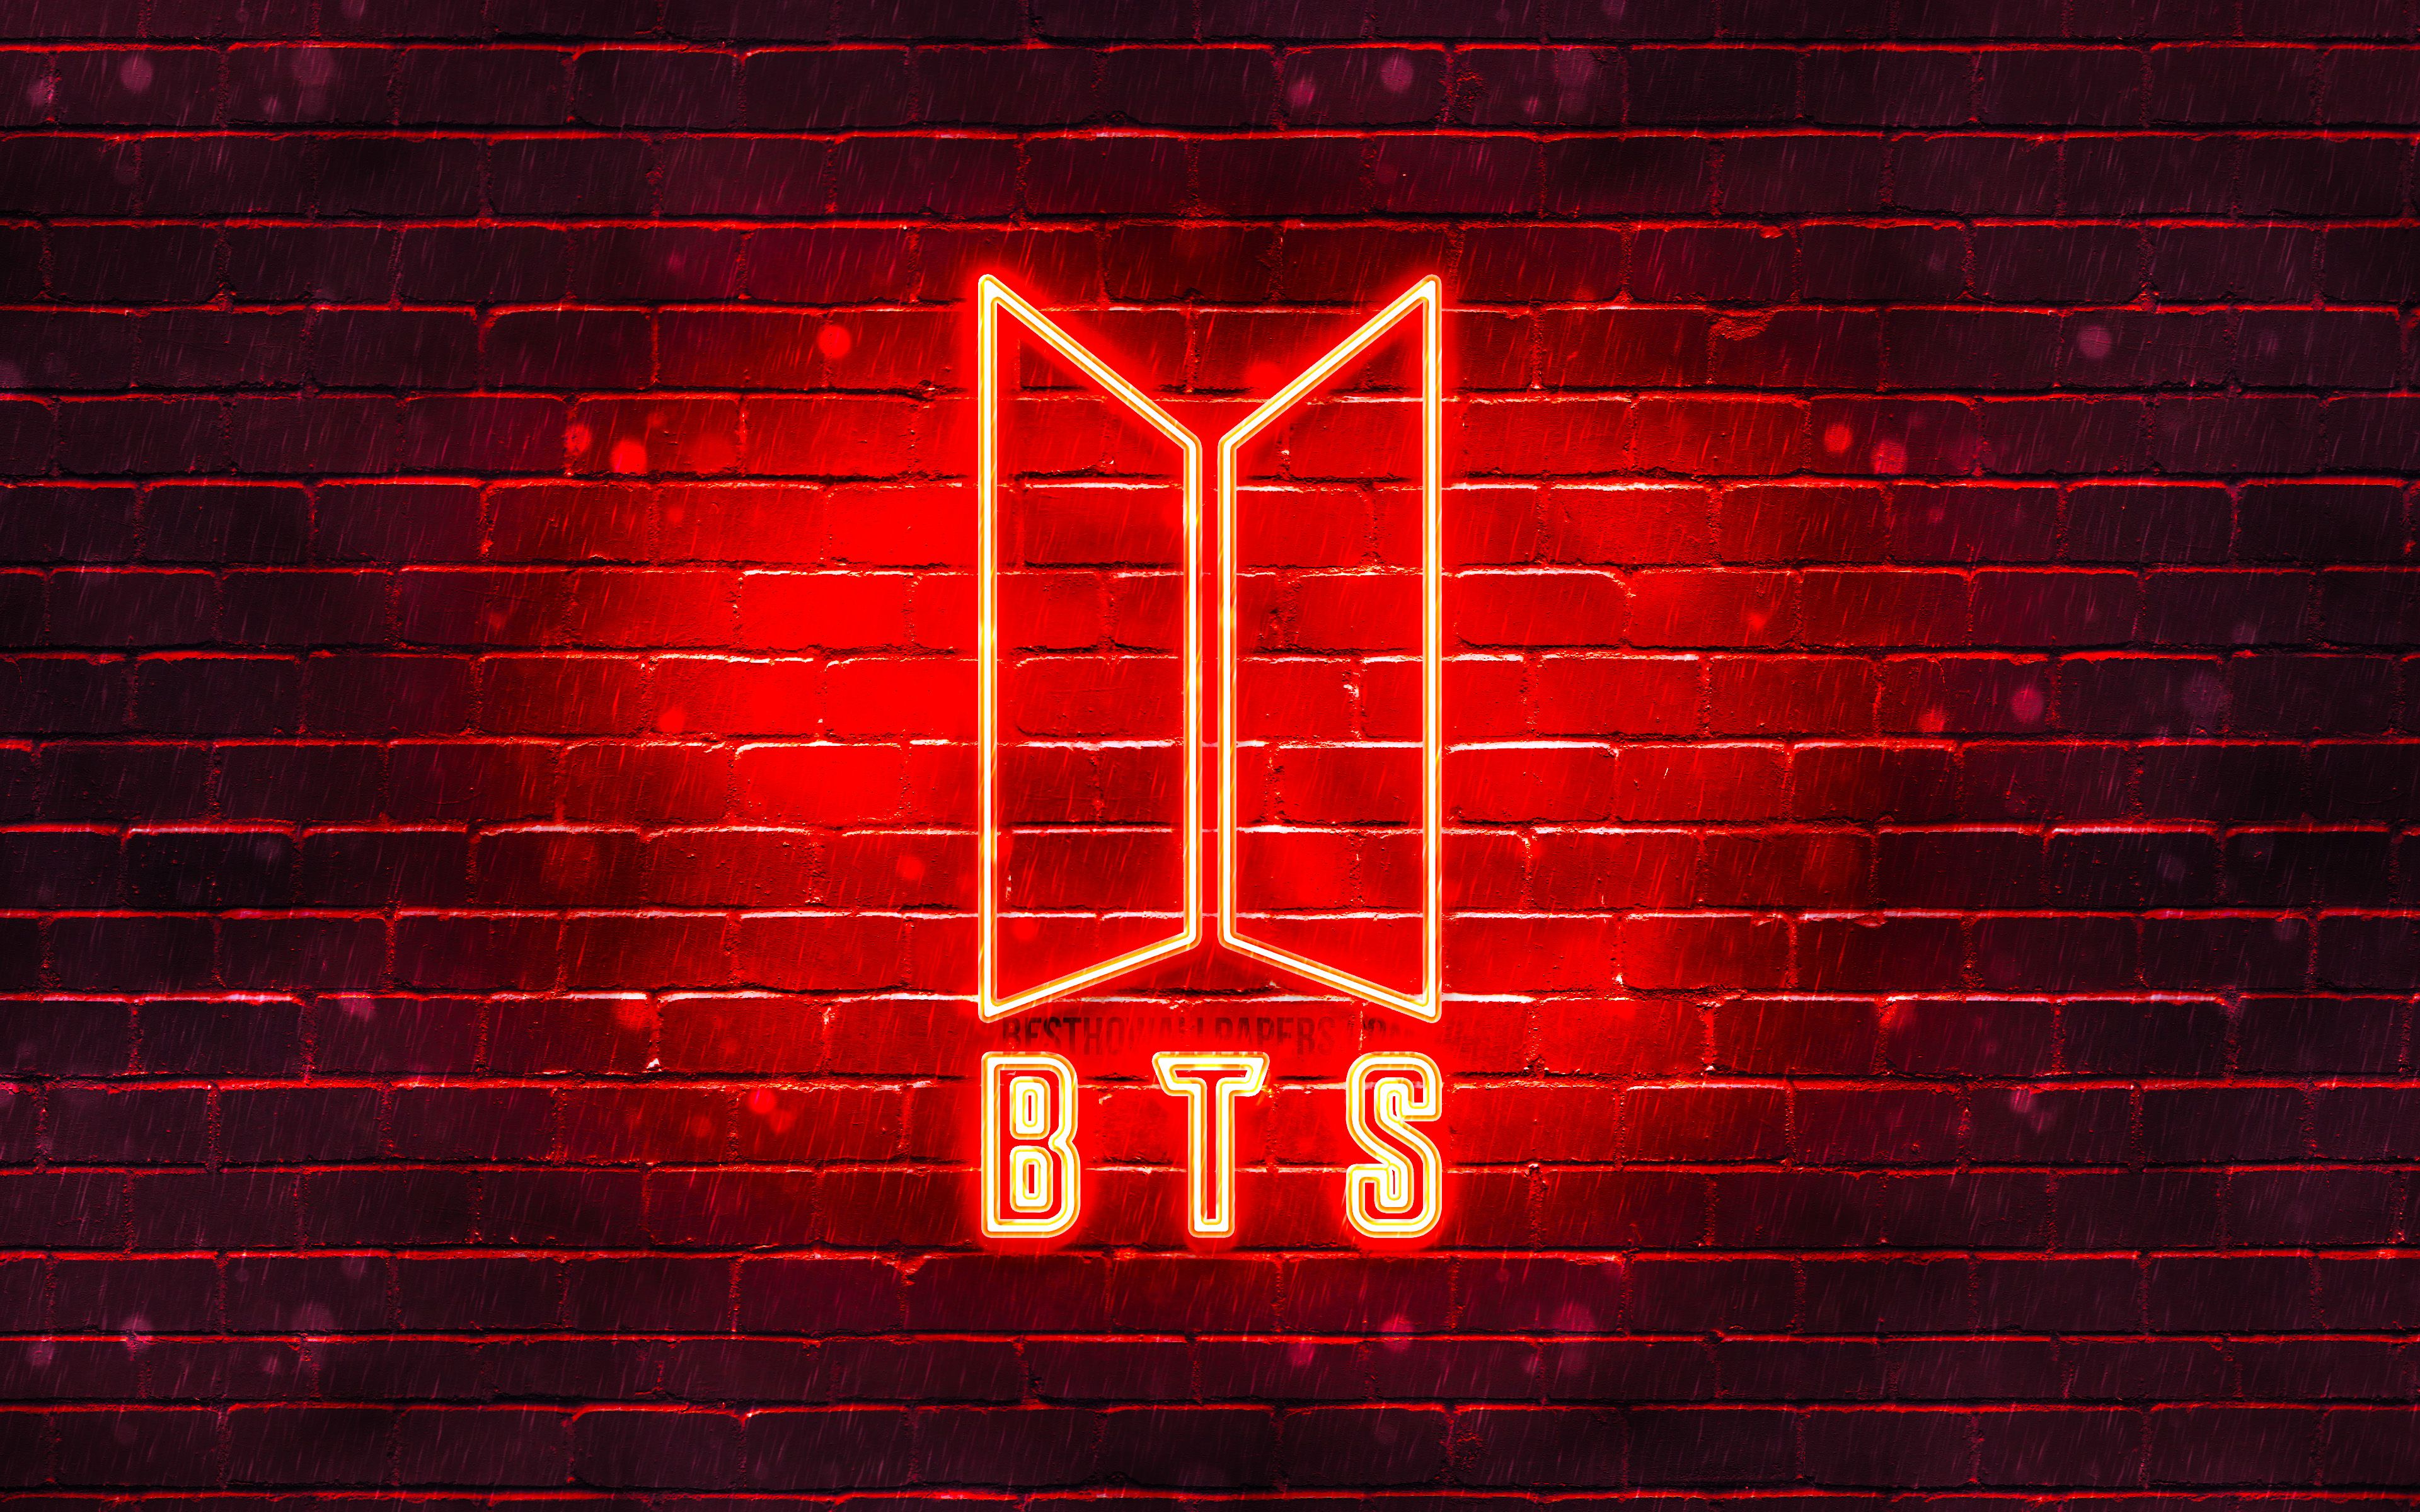 Download wallpaper BTS red logo, 4k, Bangtan Boys, red brickwall, BTS logo, korean band, BTS neon logo, BTS for desktop with resolution 3840x2400. High Quality HD picture wallpaper